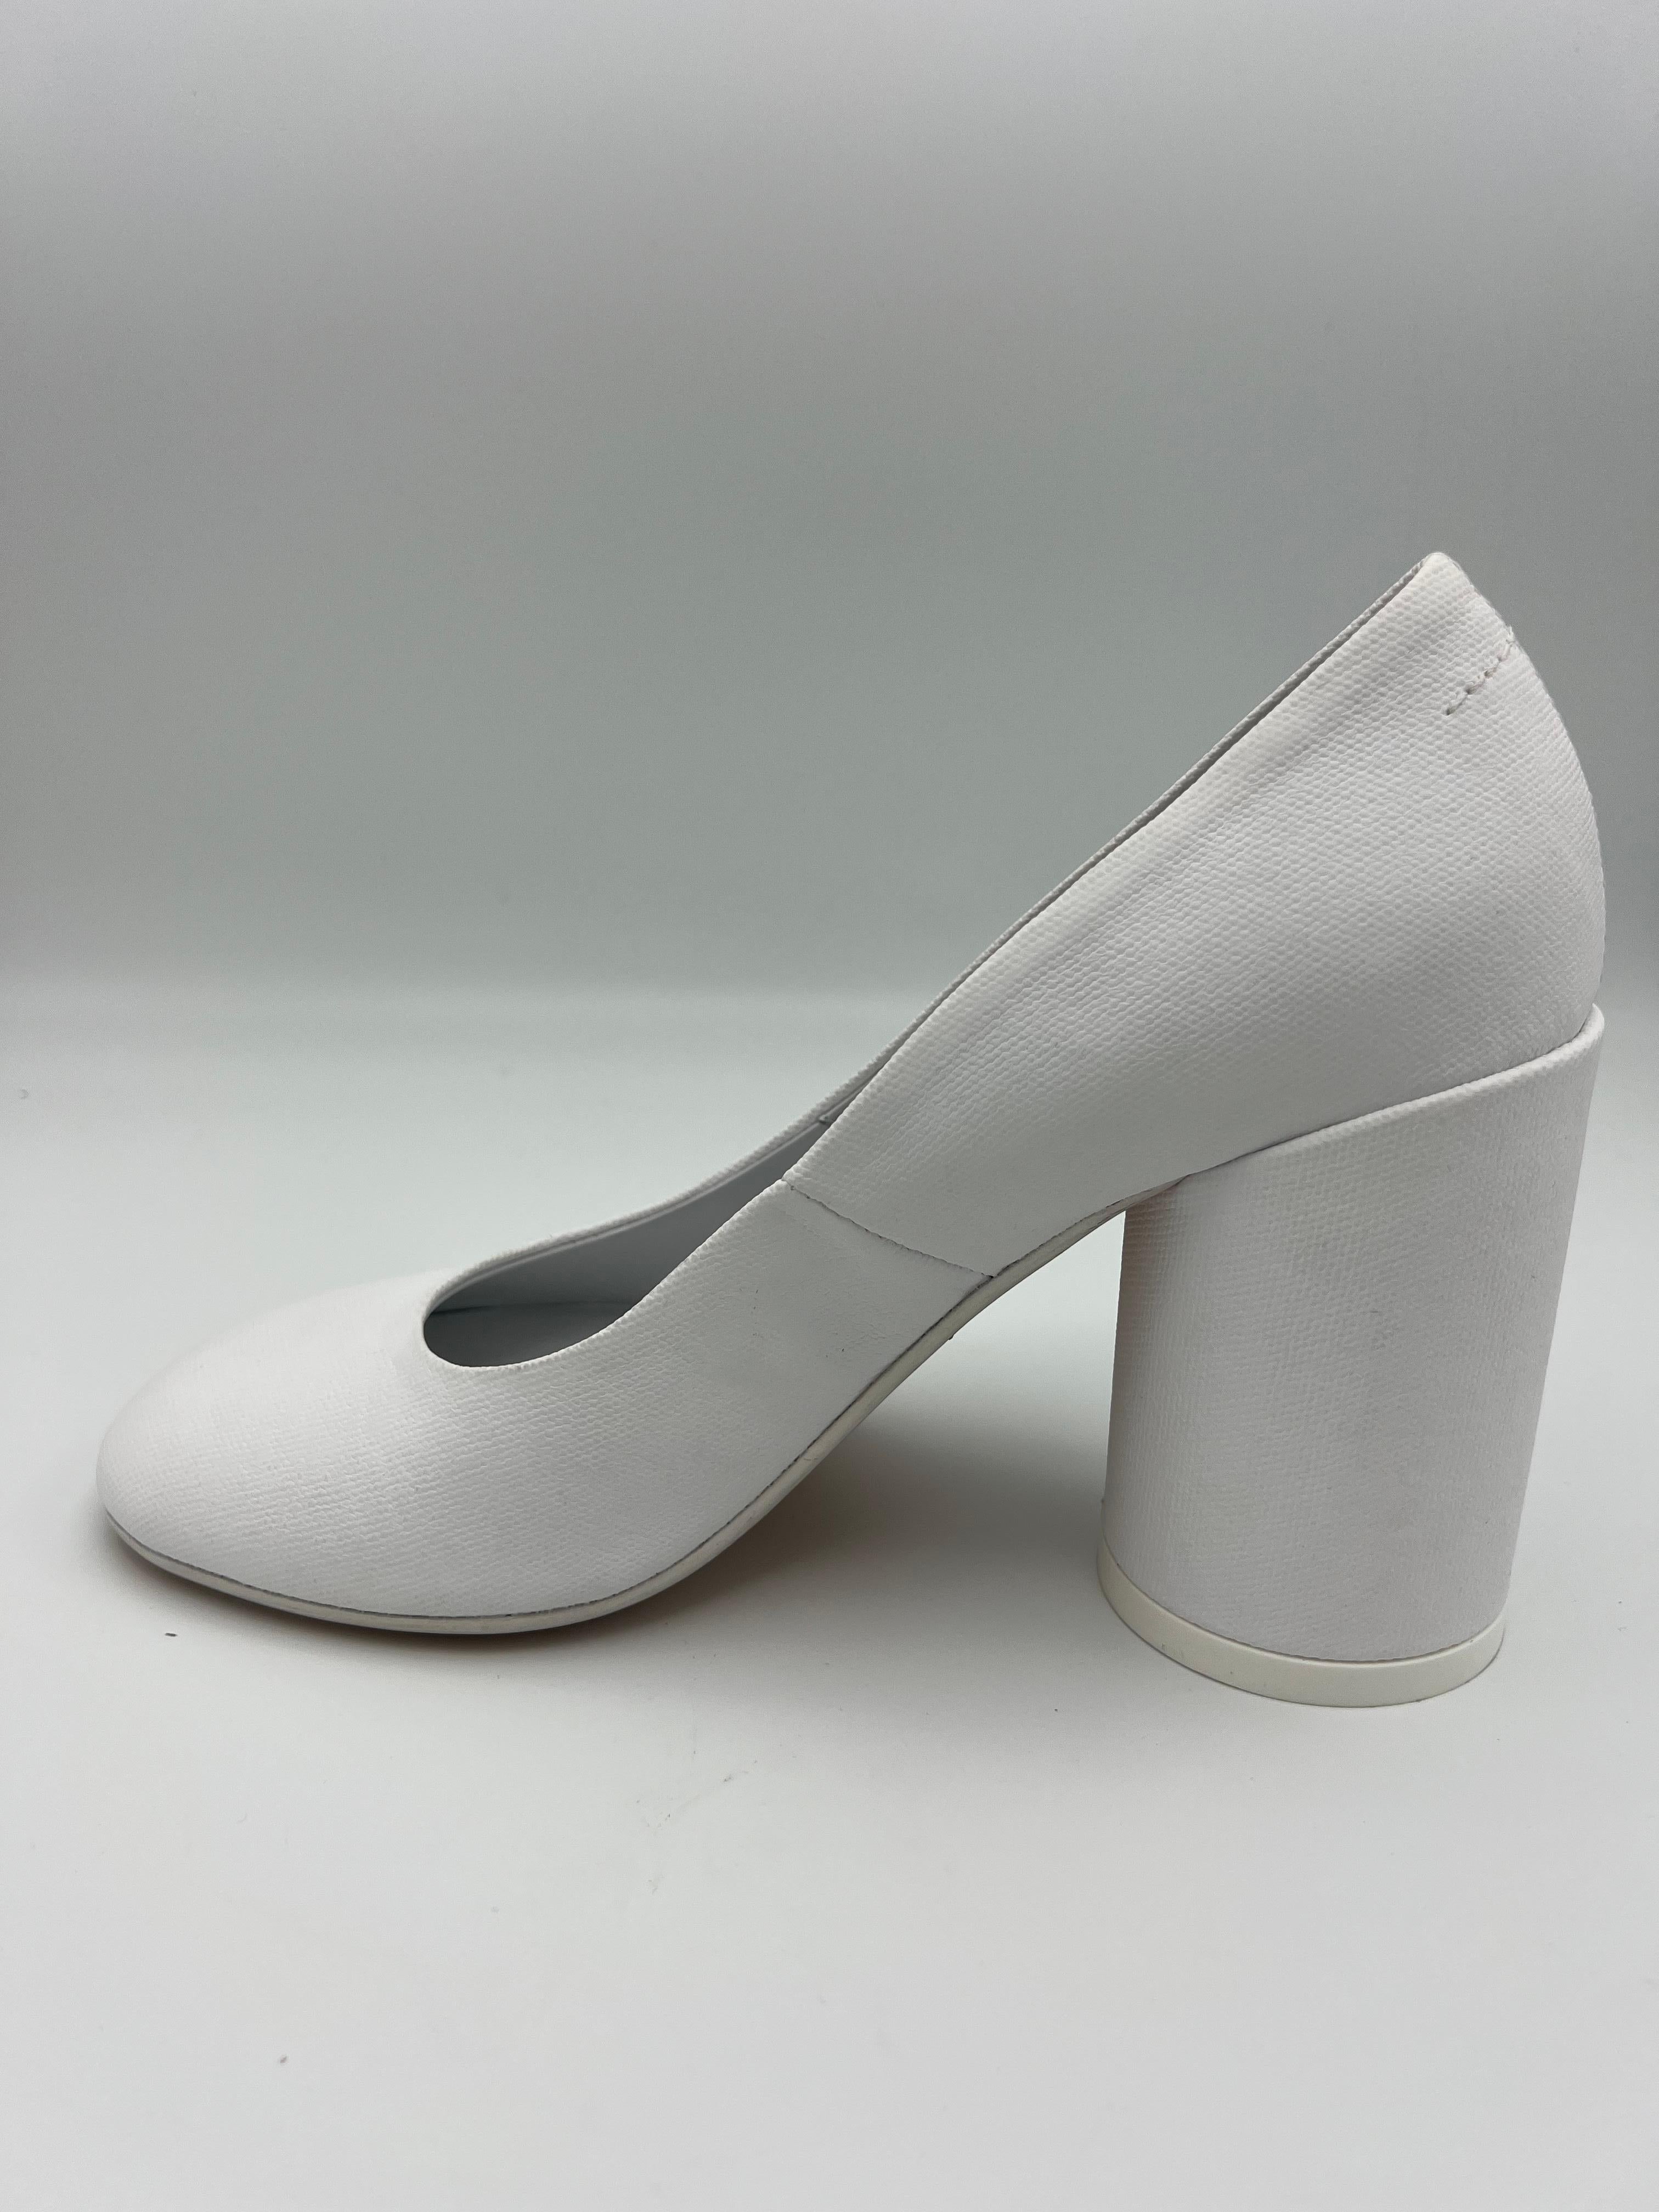 MM6 Maison Margiela White Heel Shoes, Size 38 For Sale 5